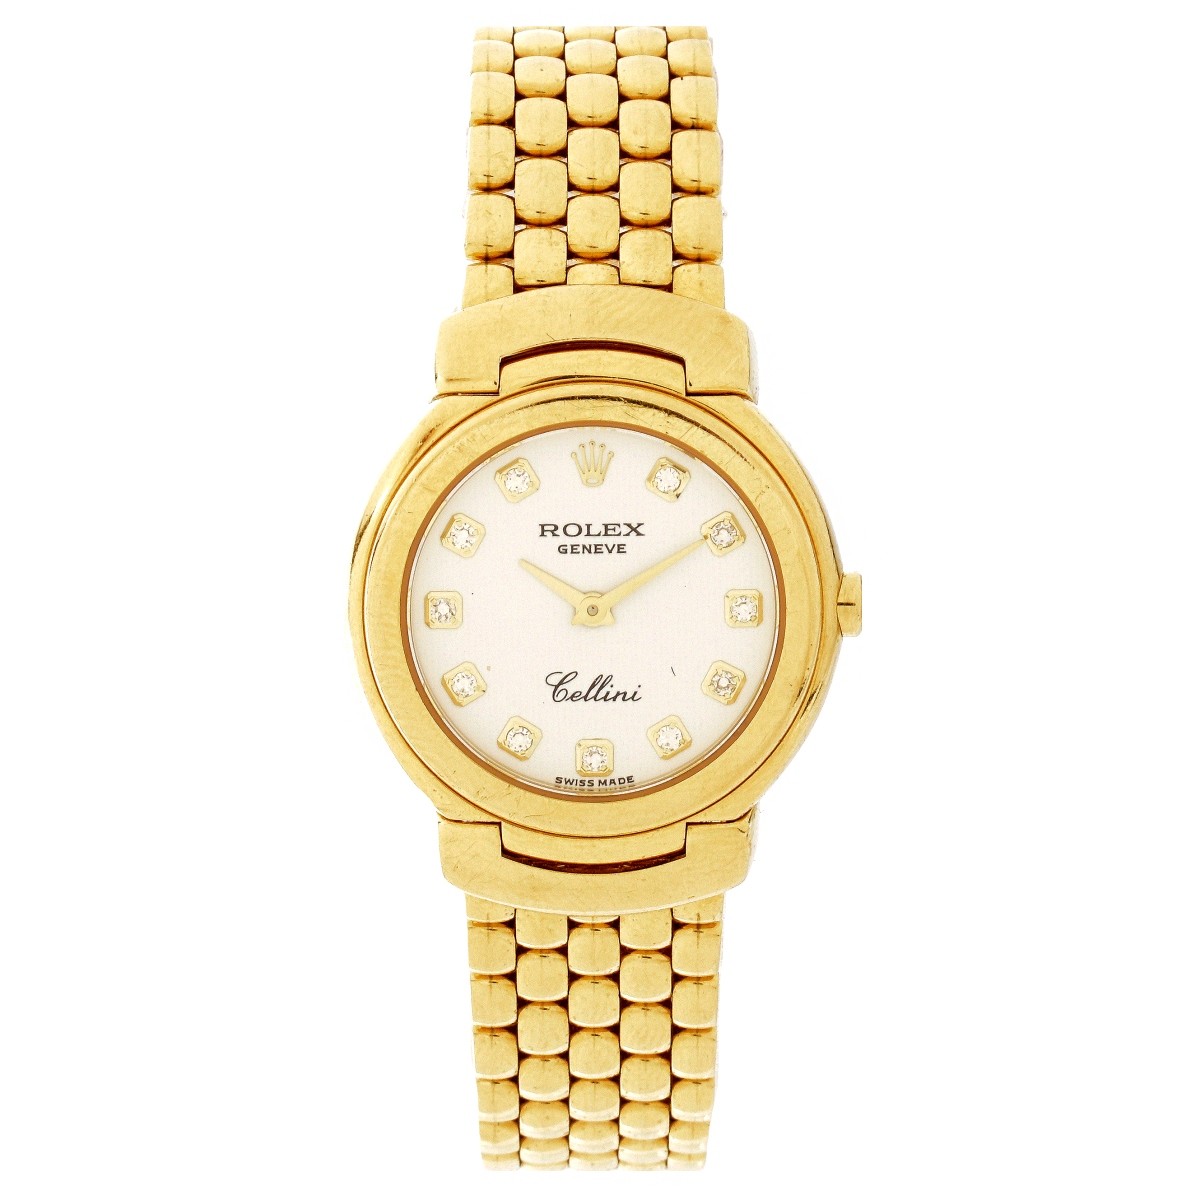 Lady's Rolex Cellini 18K Watch | Kodner Auctions